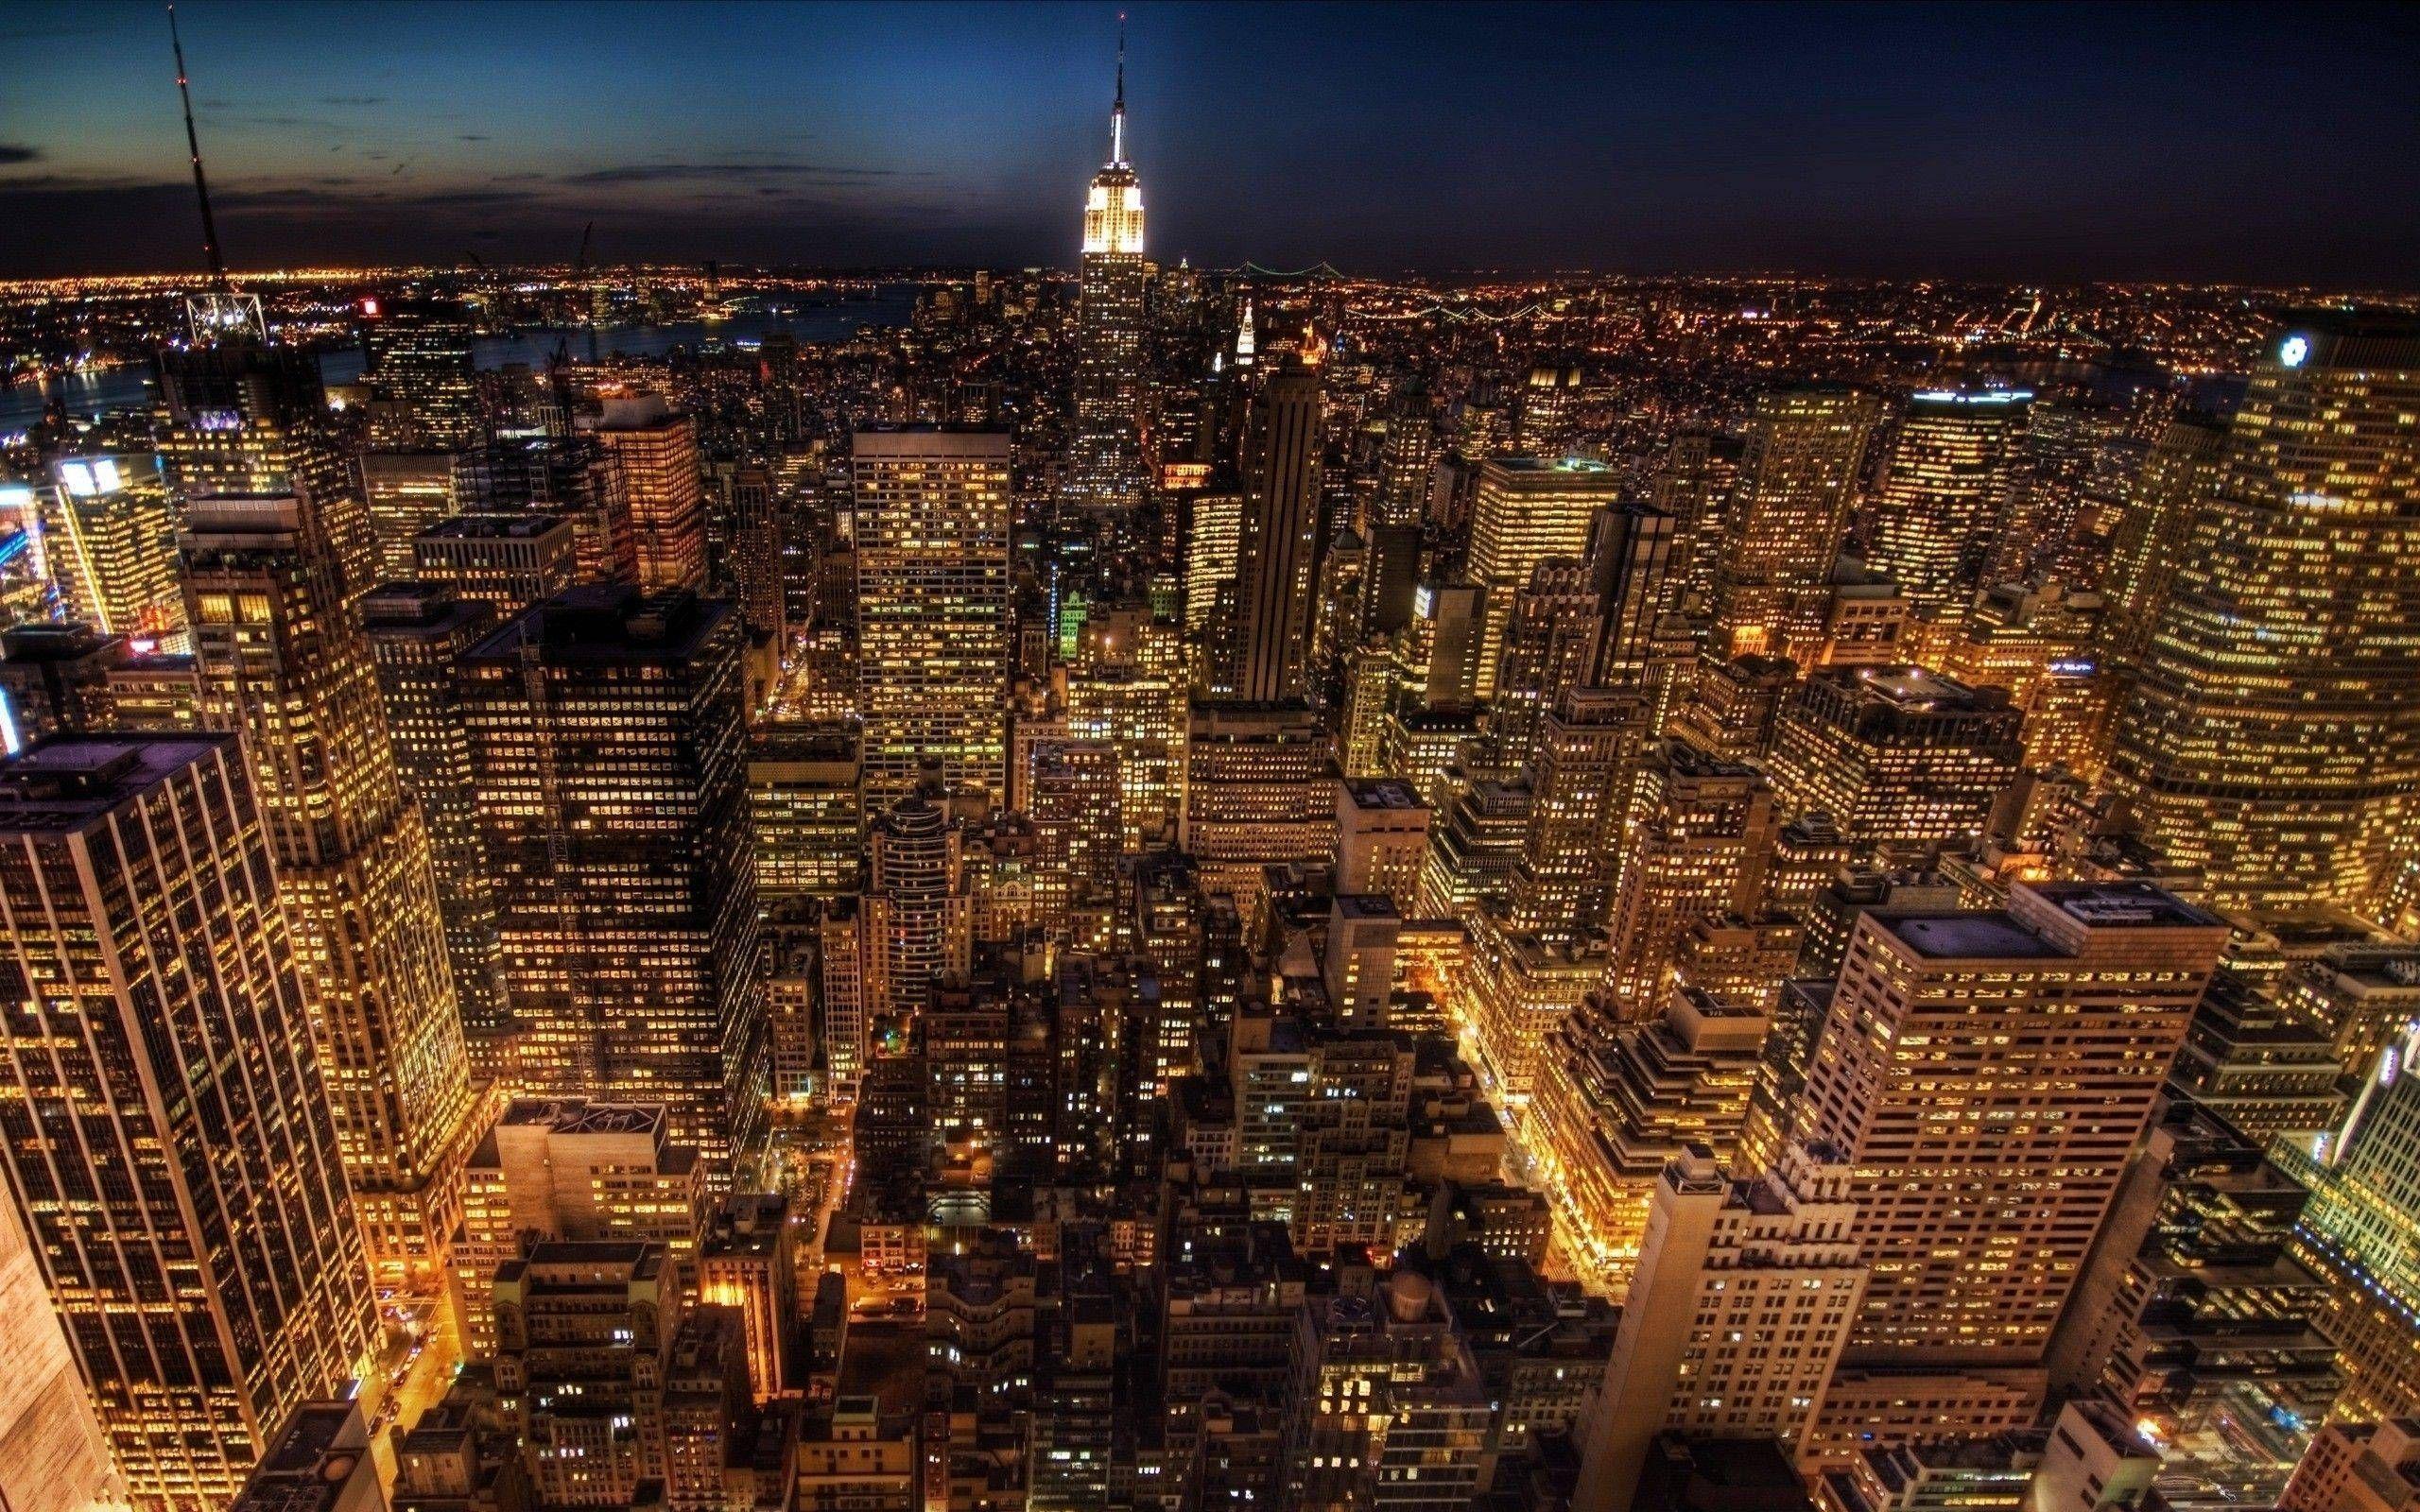 Best New York City Night HD Wallpaper FULL HD 1080p For PC Background. New york wallpaper, New york picture, City